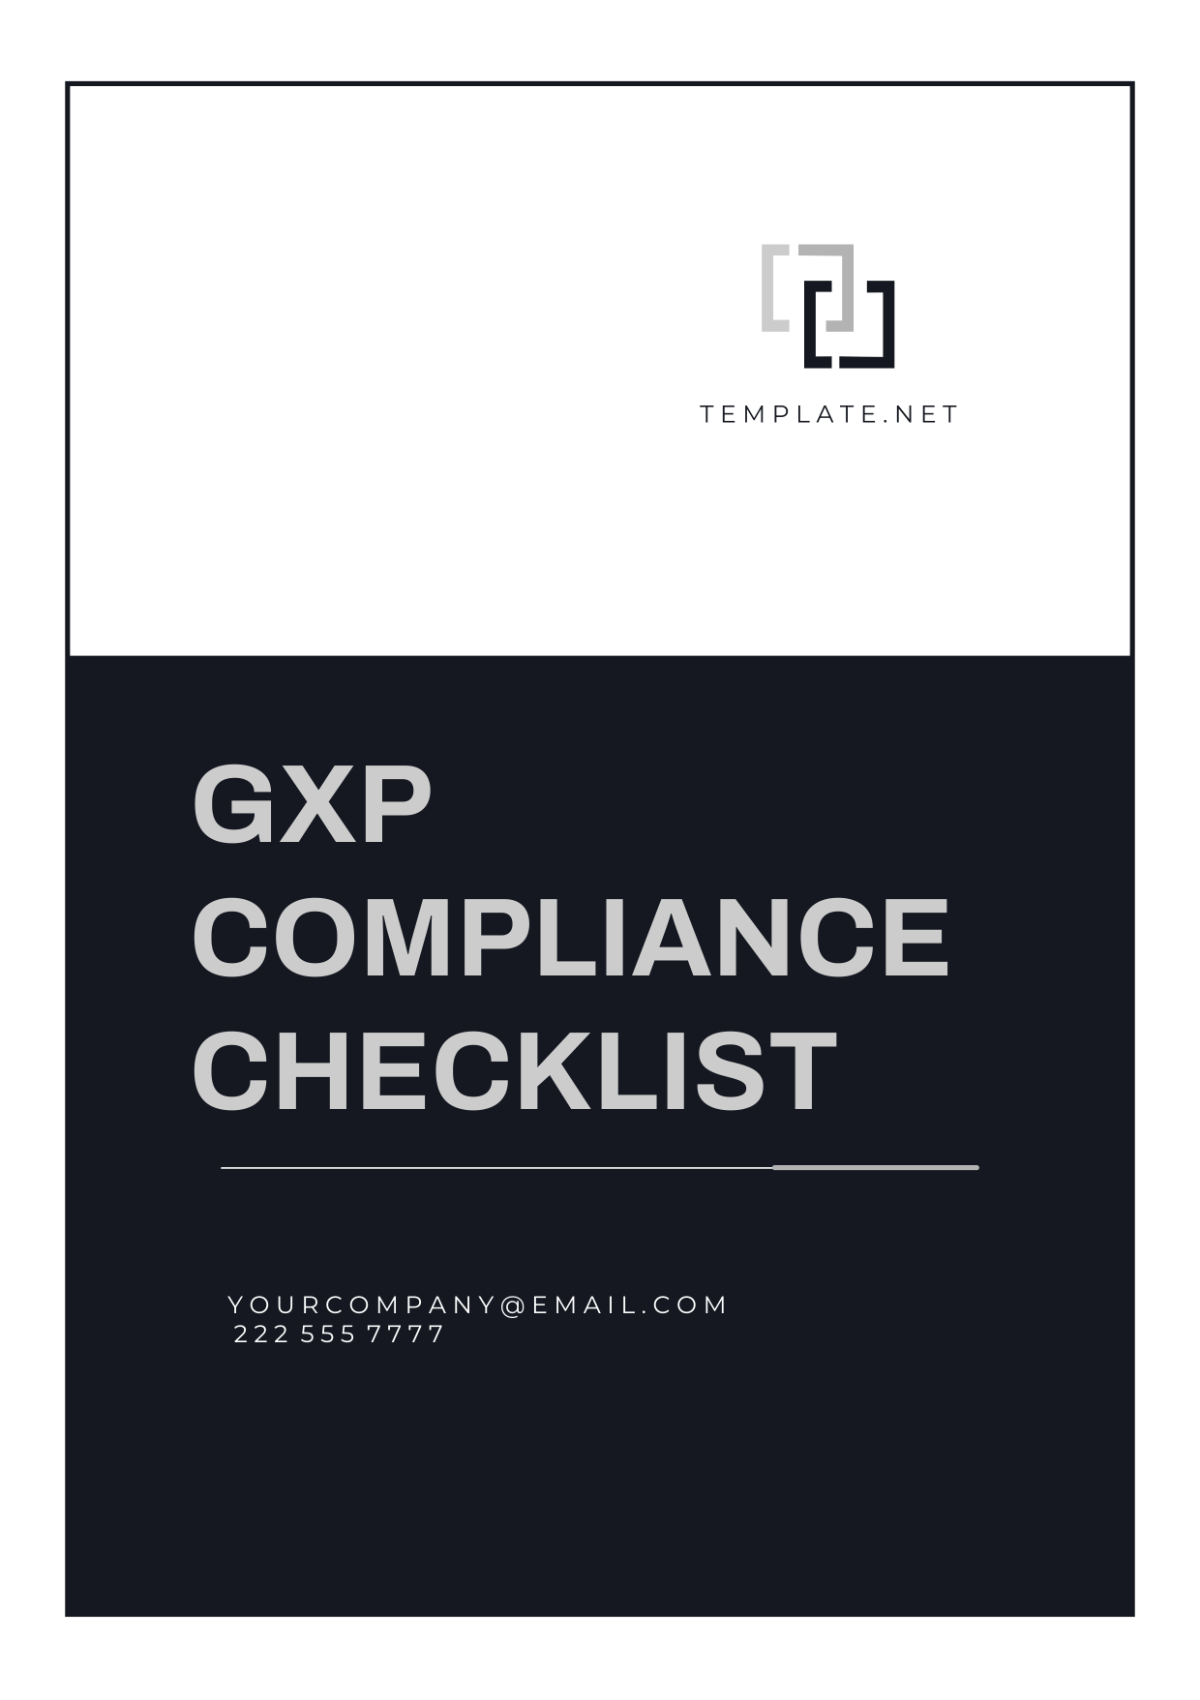 GXP Compliance Checklist Template